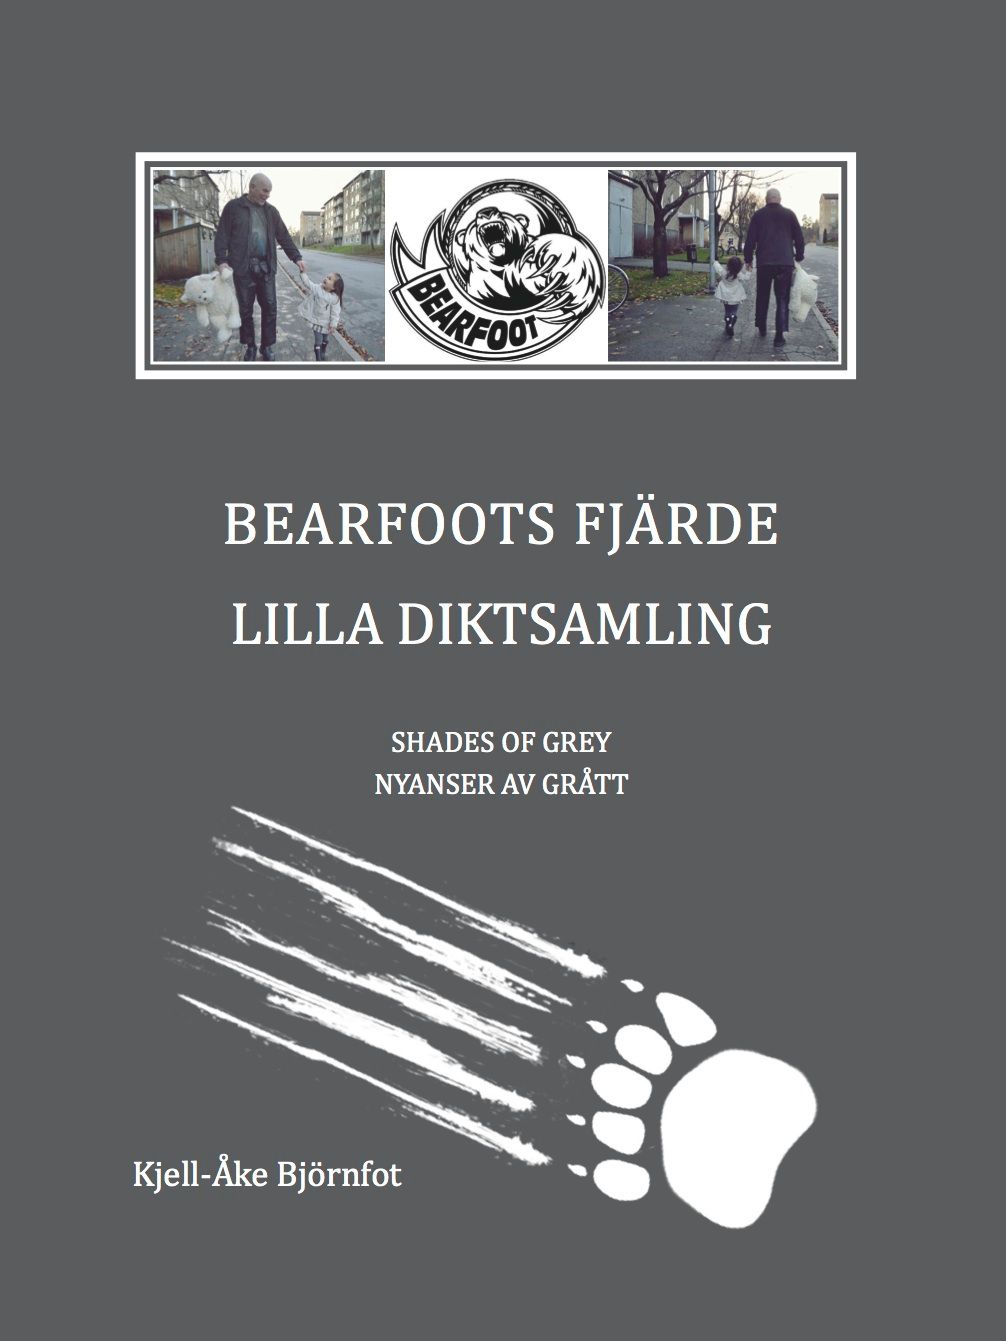 BEARFOOTS FJÄRDE, e-bog af Kjell-Åke Björnfot